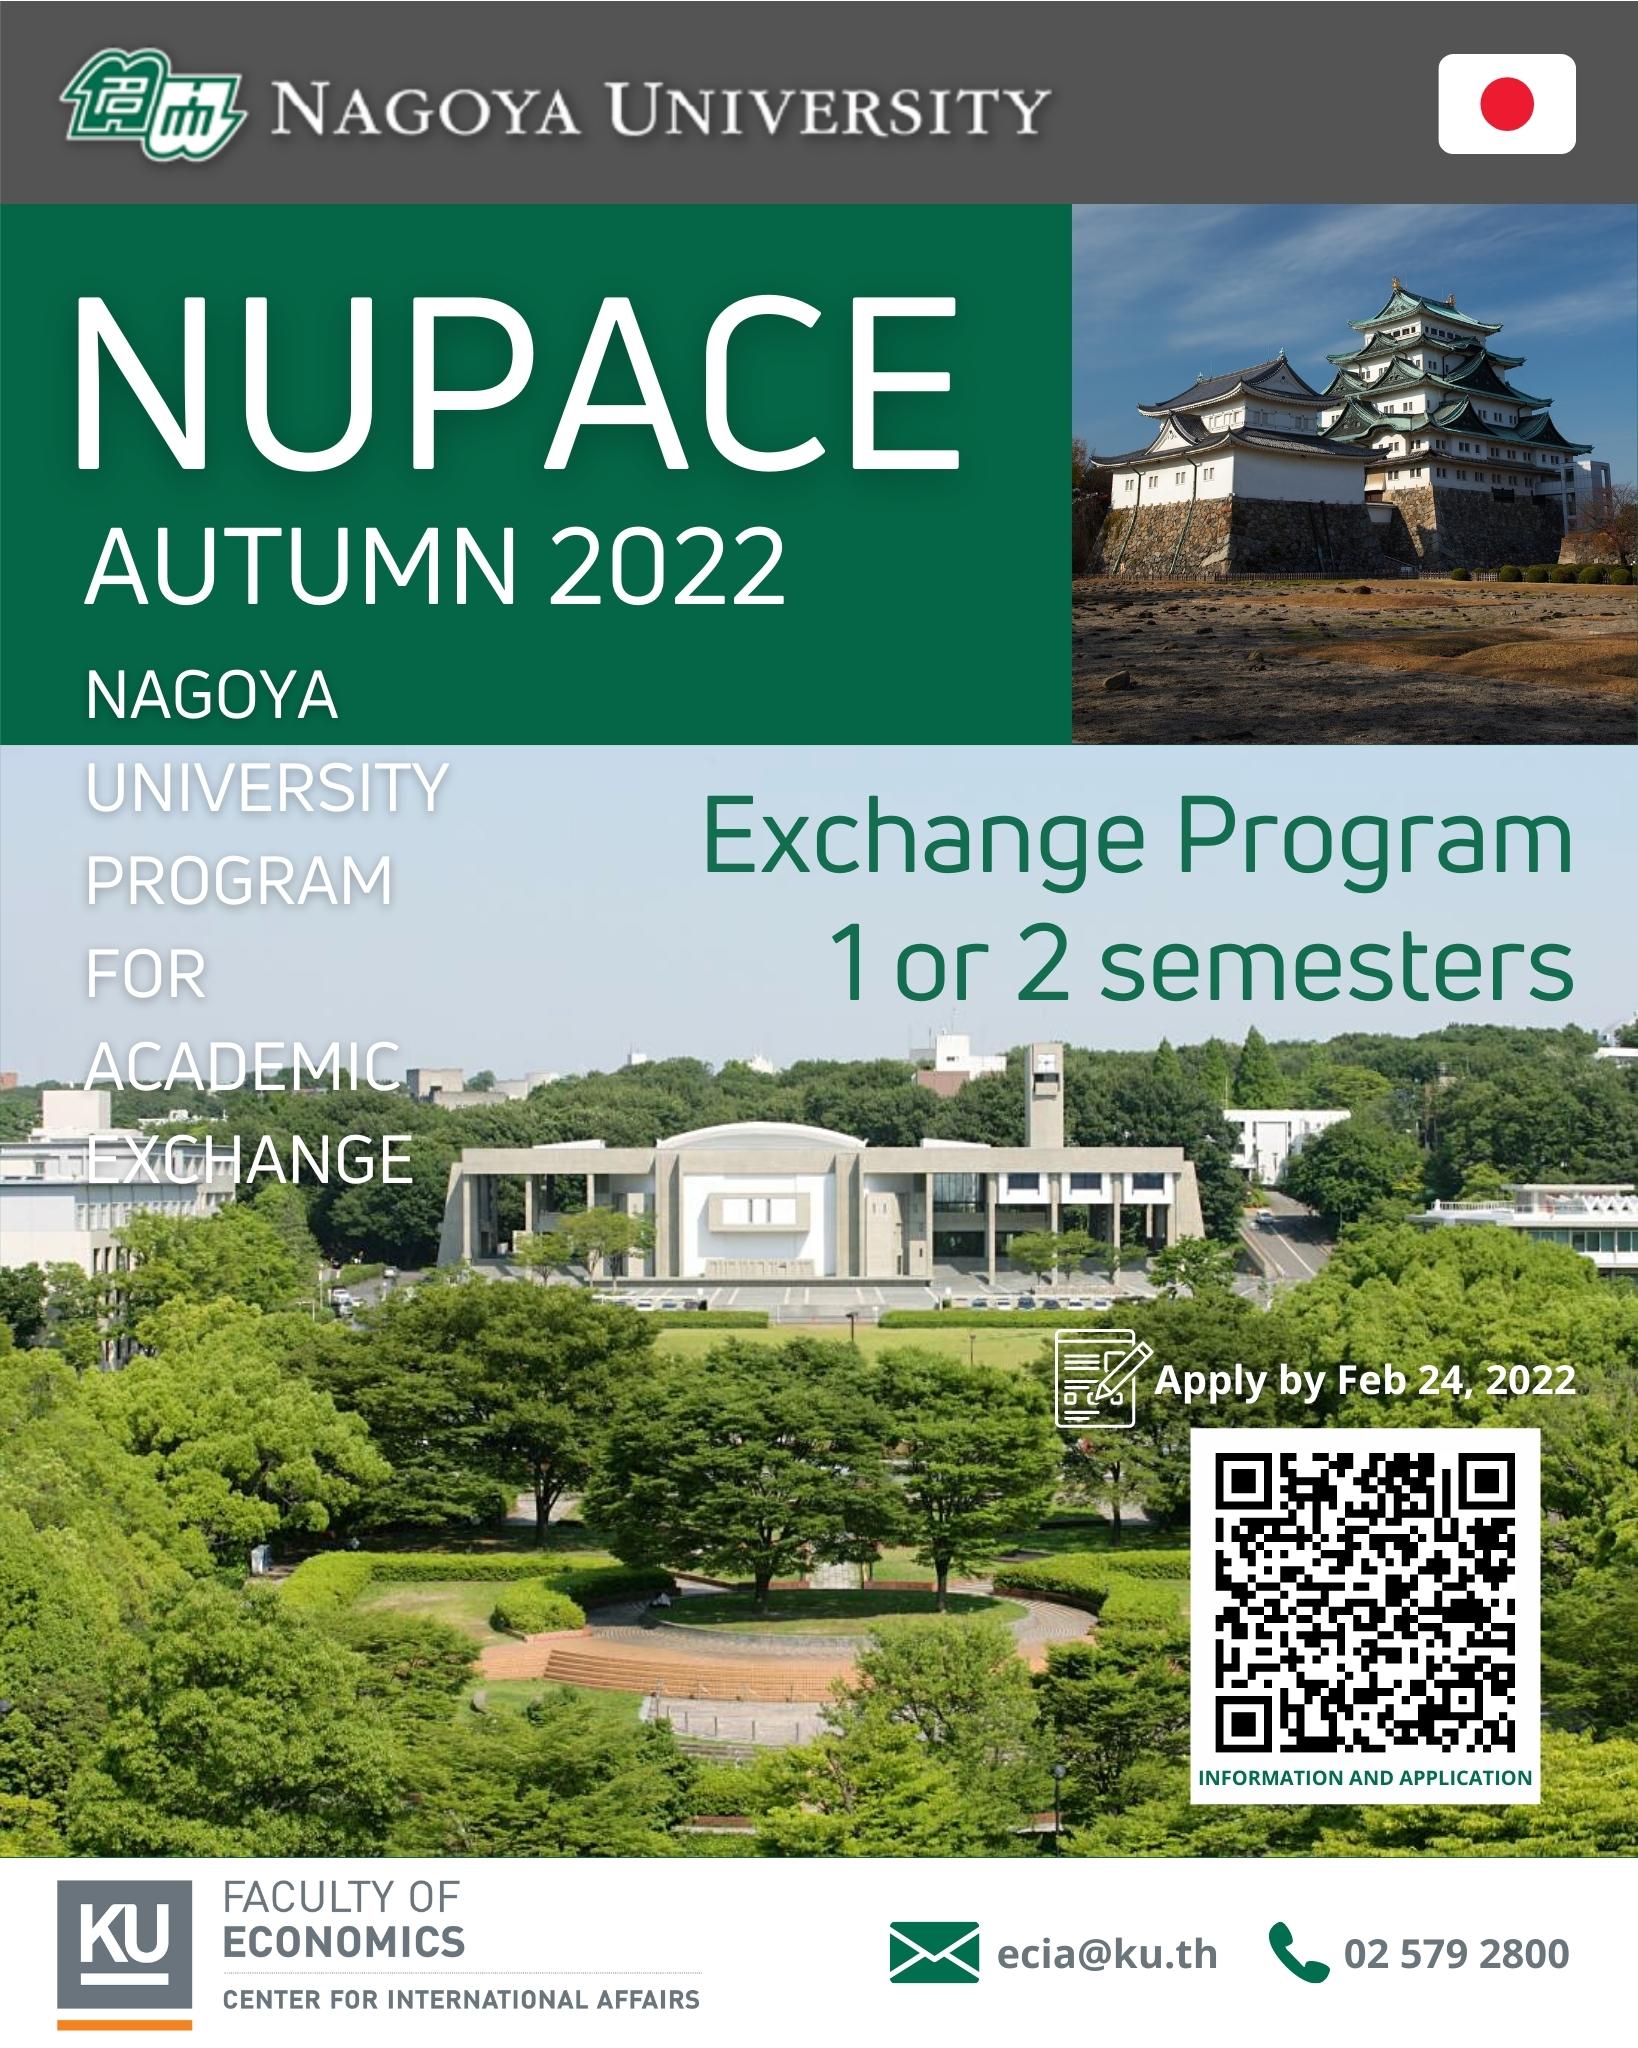 NUPACE: Nagoya University Program for Academic Exchange Autumn 2022